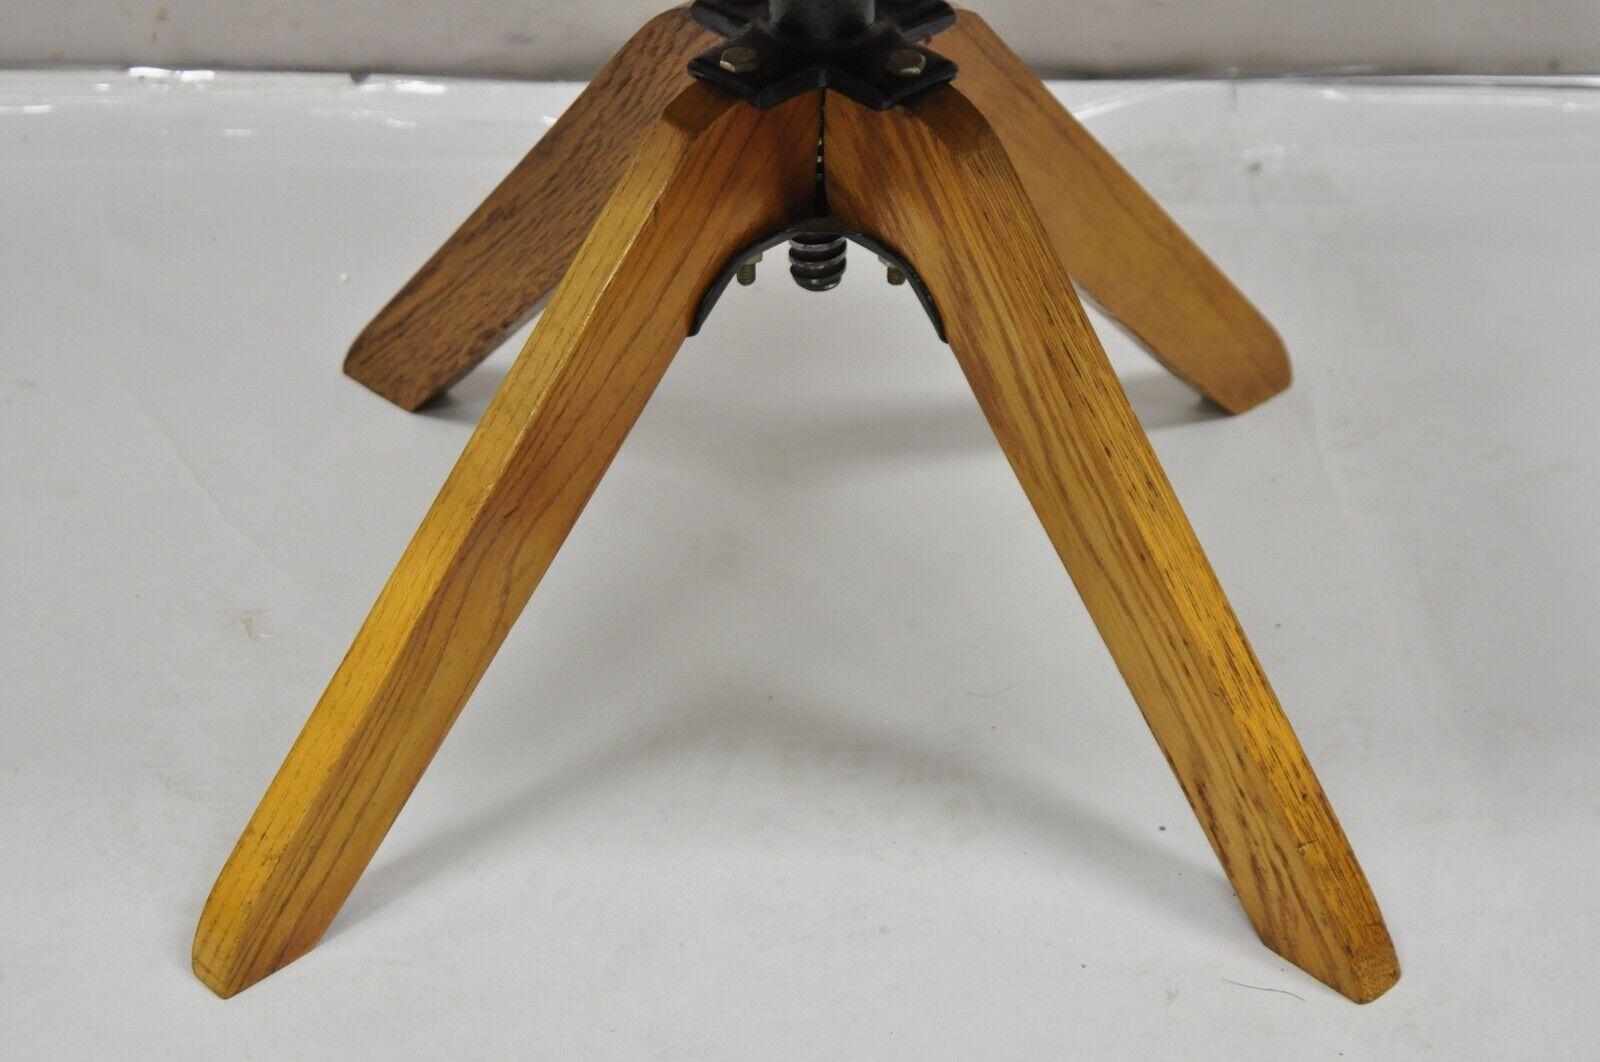 Arts and Crafts Vintage Mission Arts & Crafts Oak Wood Child’s School Desk Chair For Sale